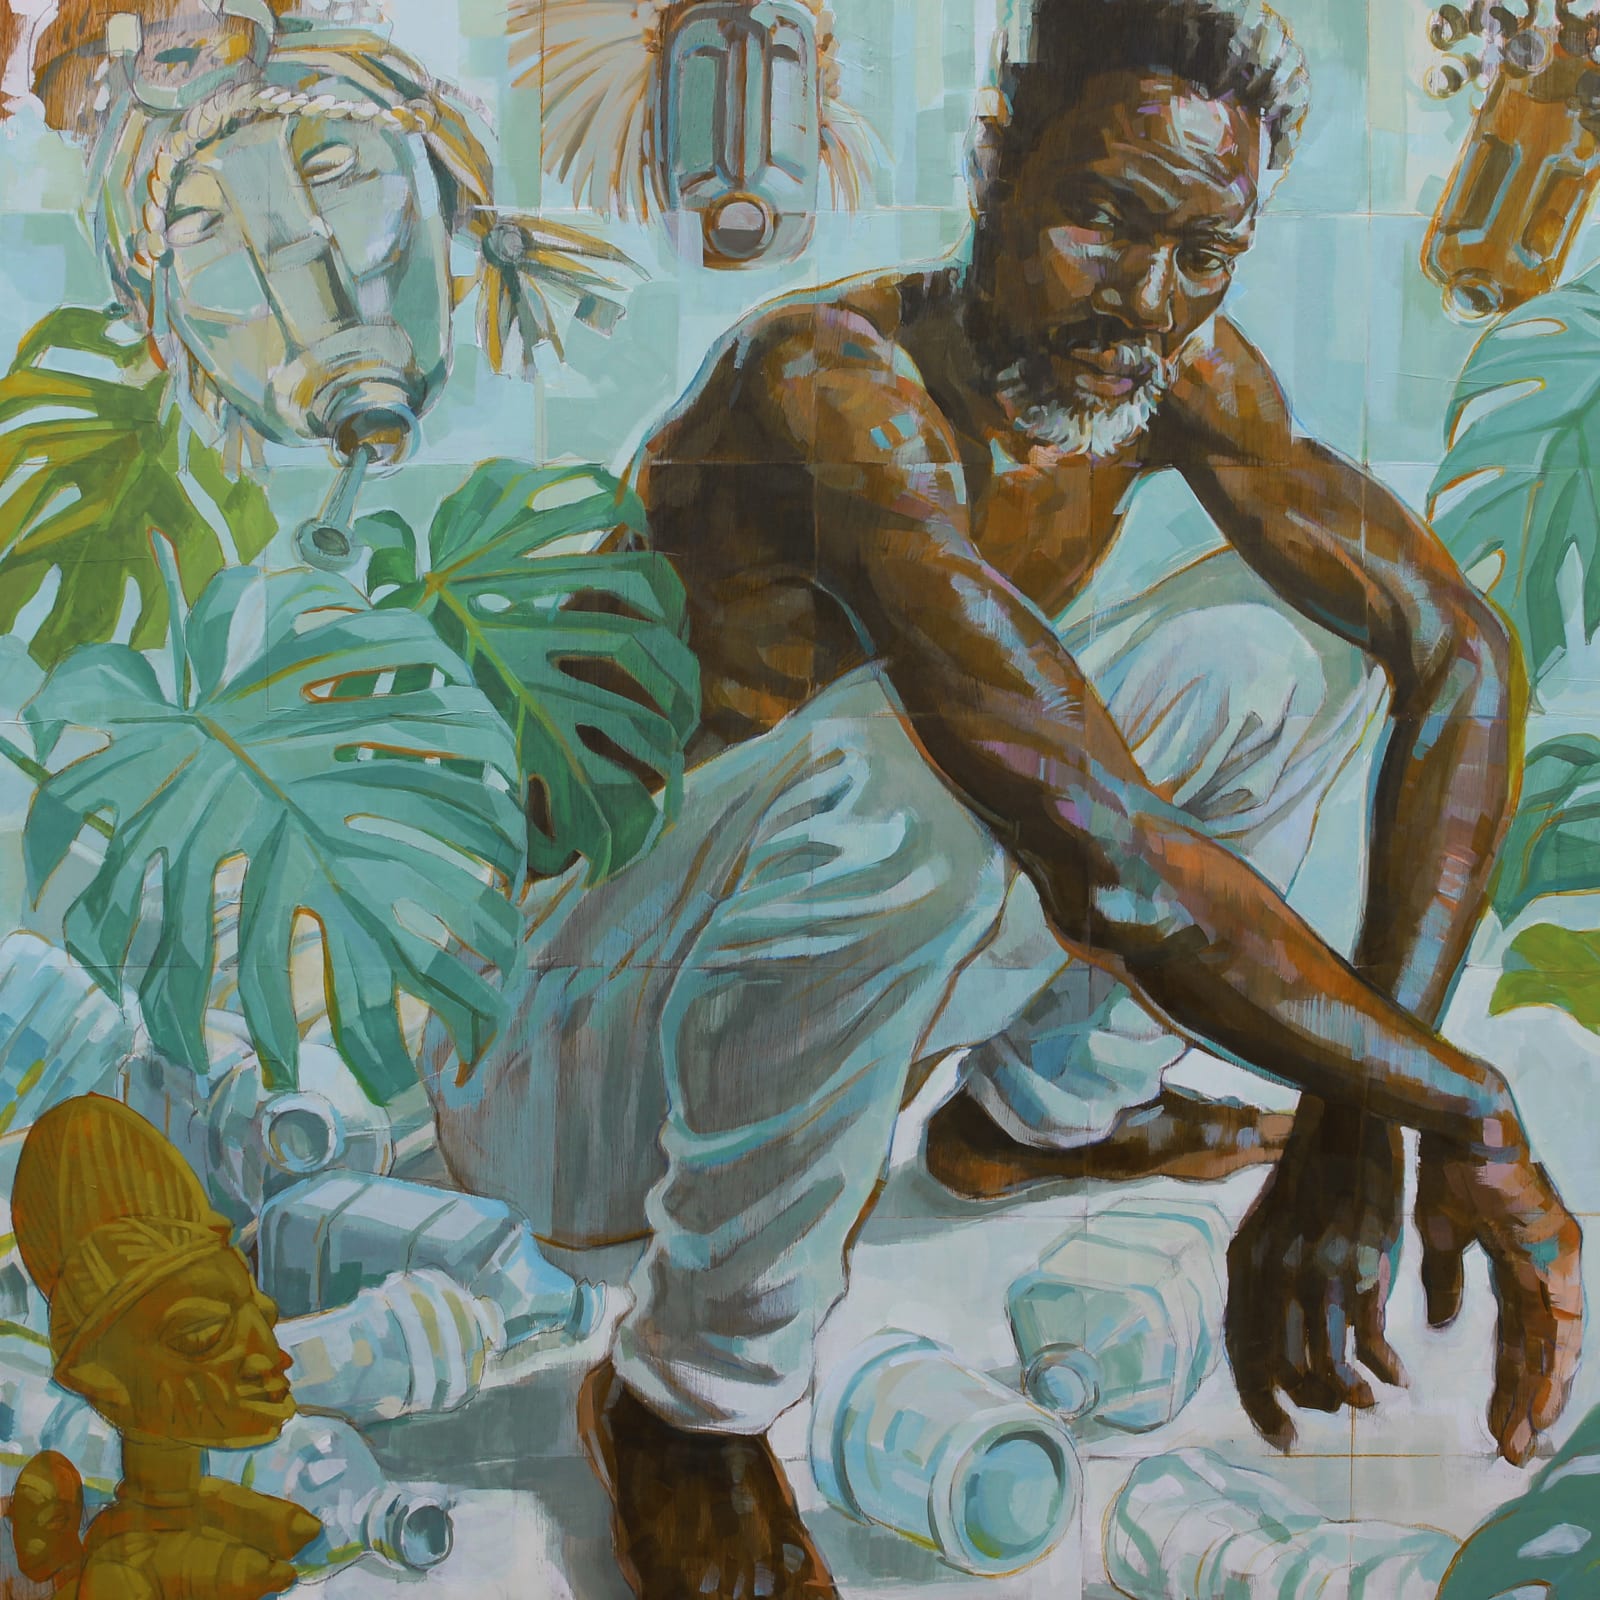 Alvin Kofi, The Paradoxical Influence of Art on Artist